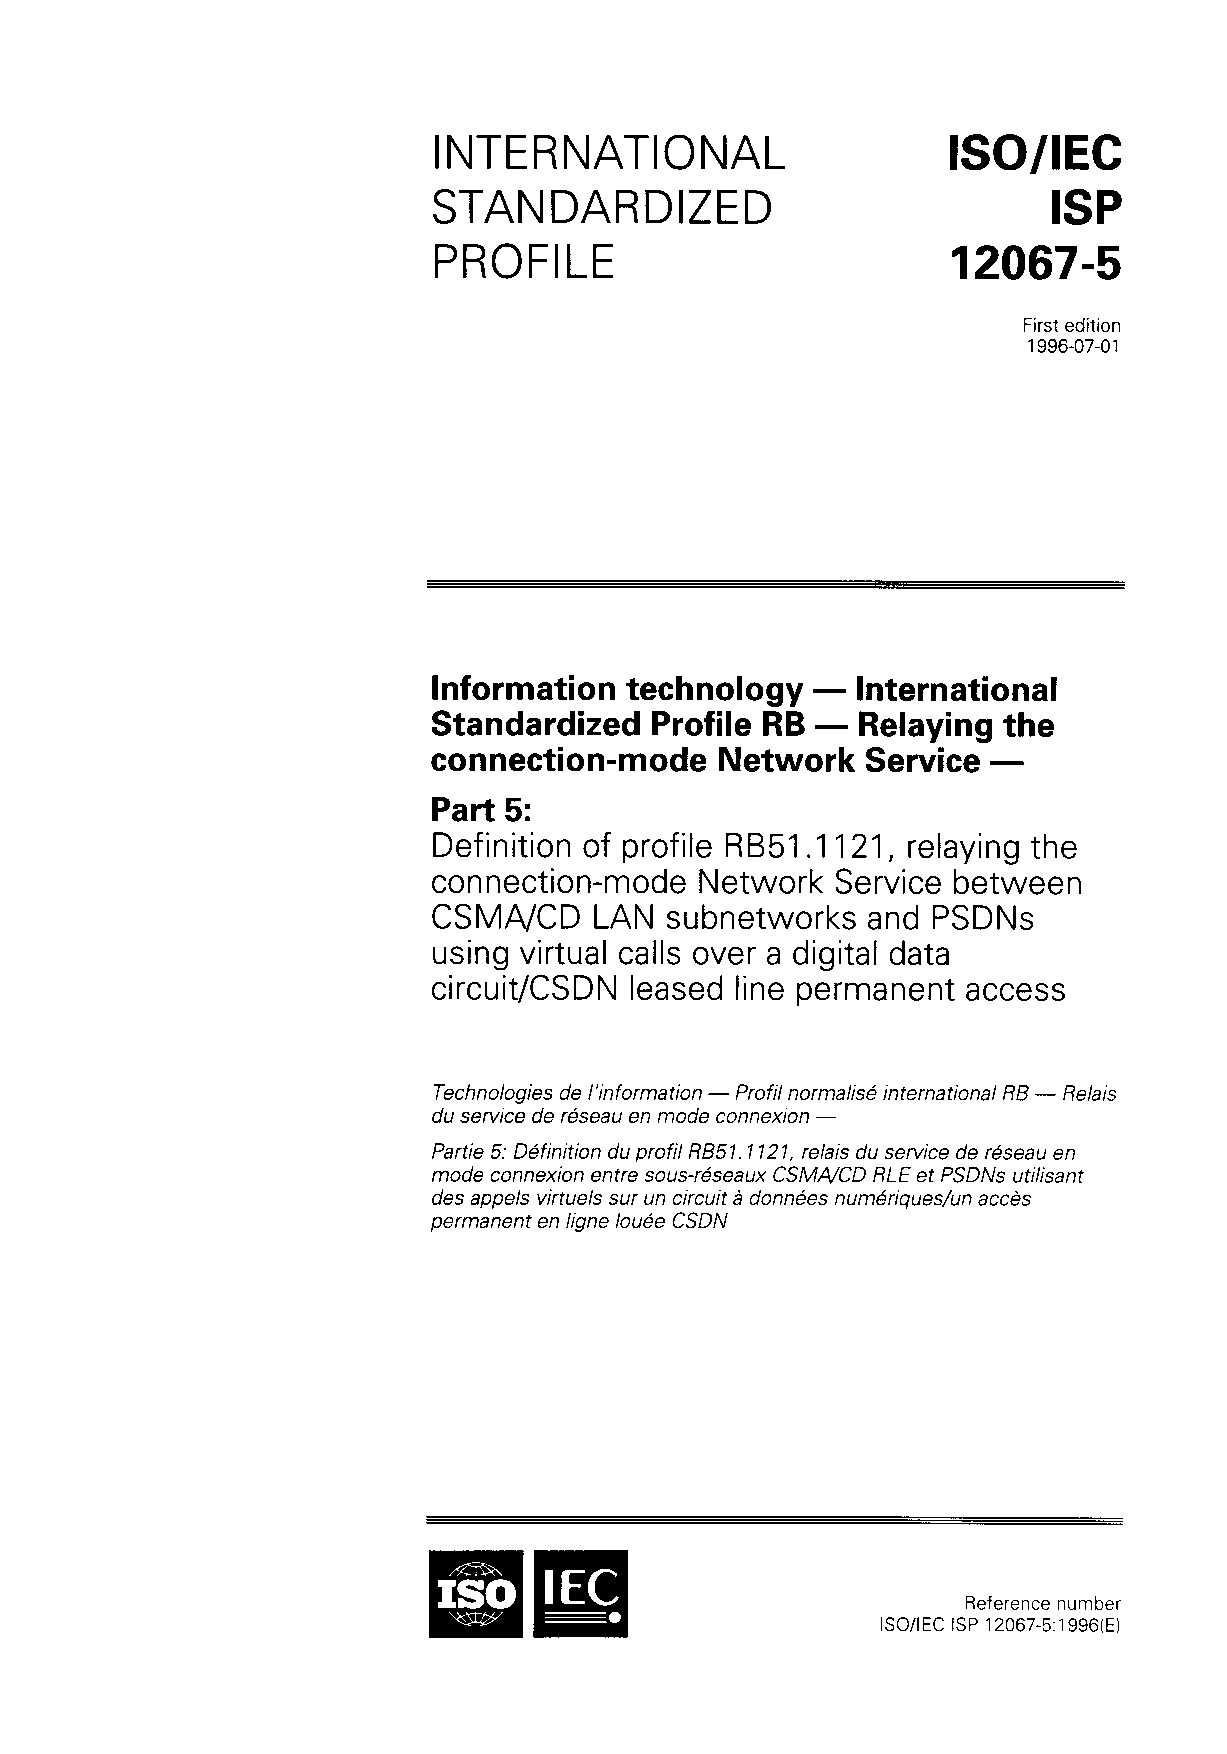 ISO/IEC ISP 12067-5:1996封面图